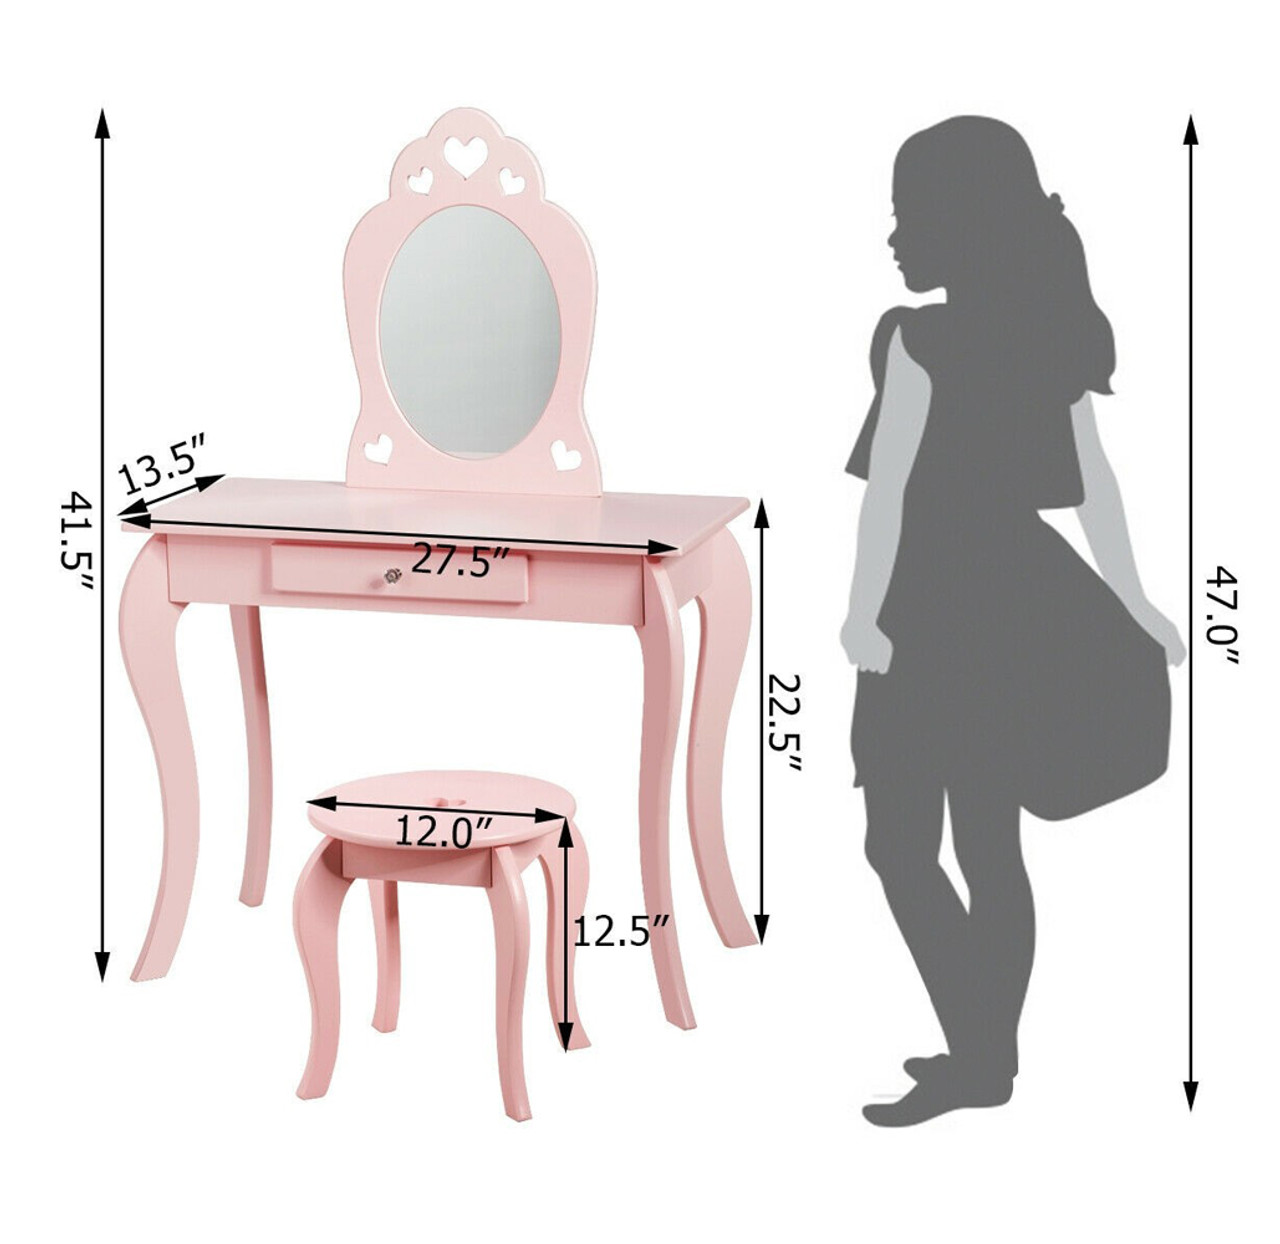 Kids' Princess Dressing Vanity Set product image